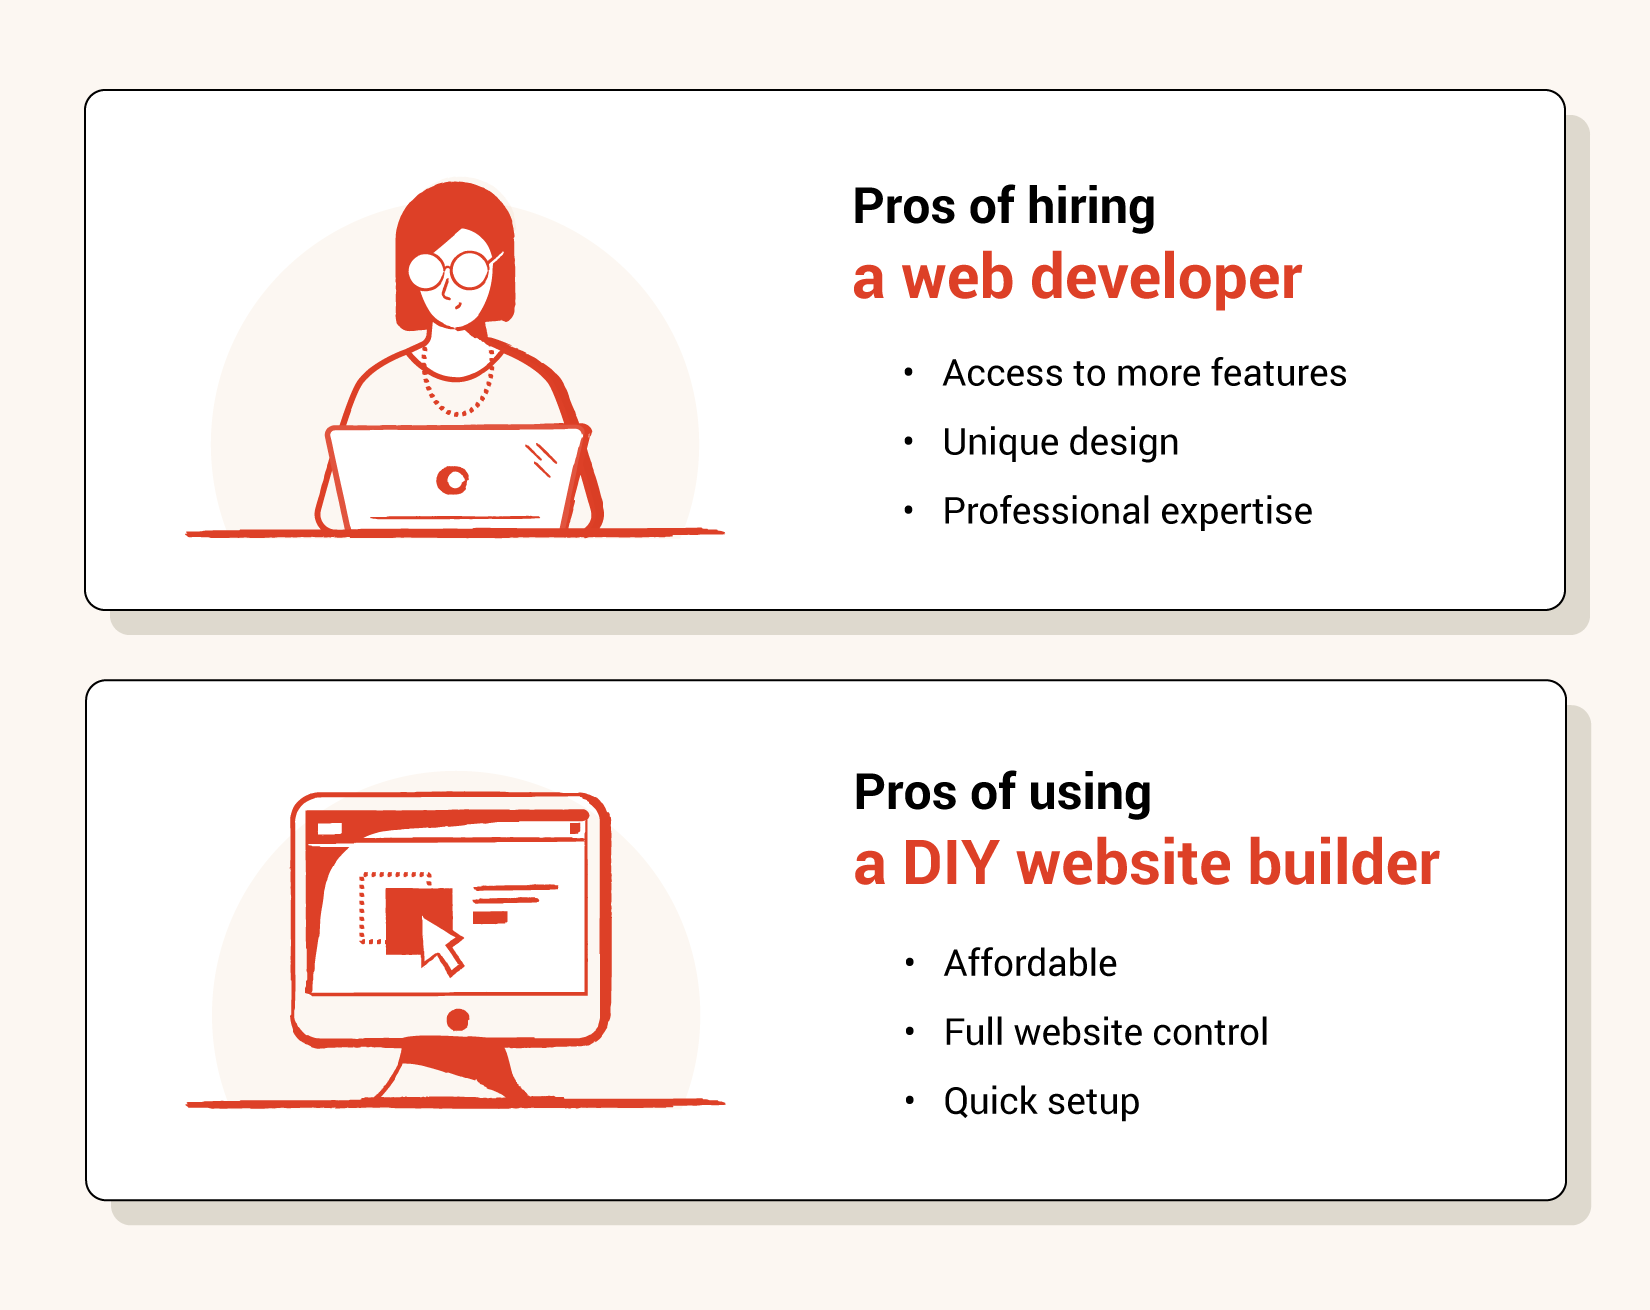 Pros of hiring a web developer vs pros of using a DIY website builder infographic